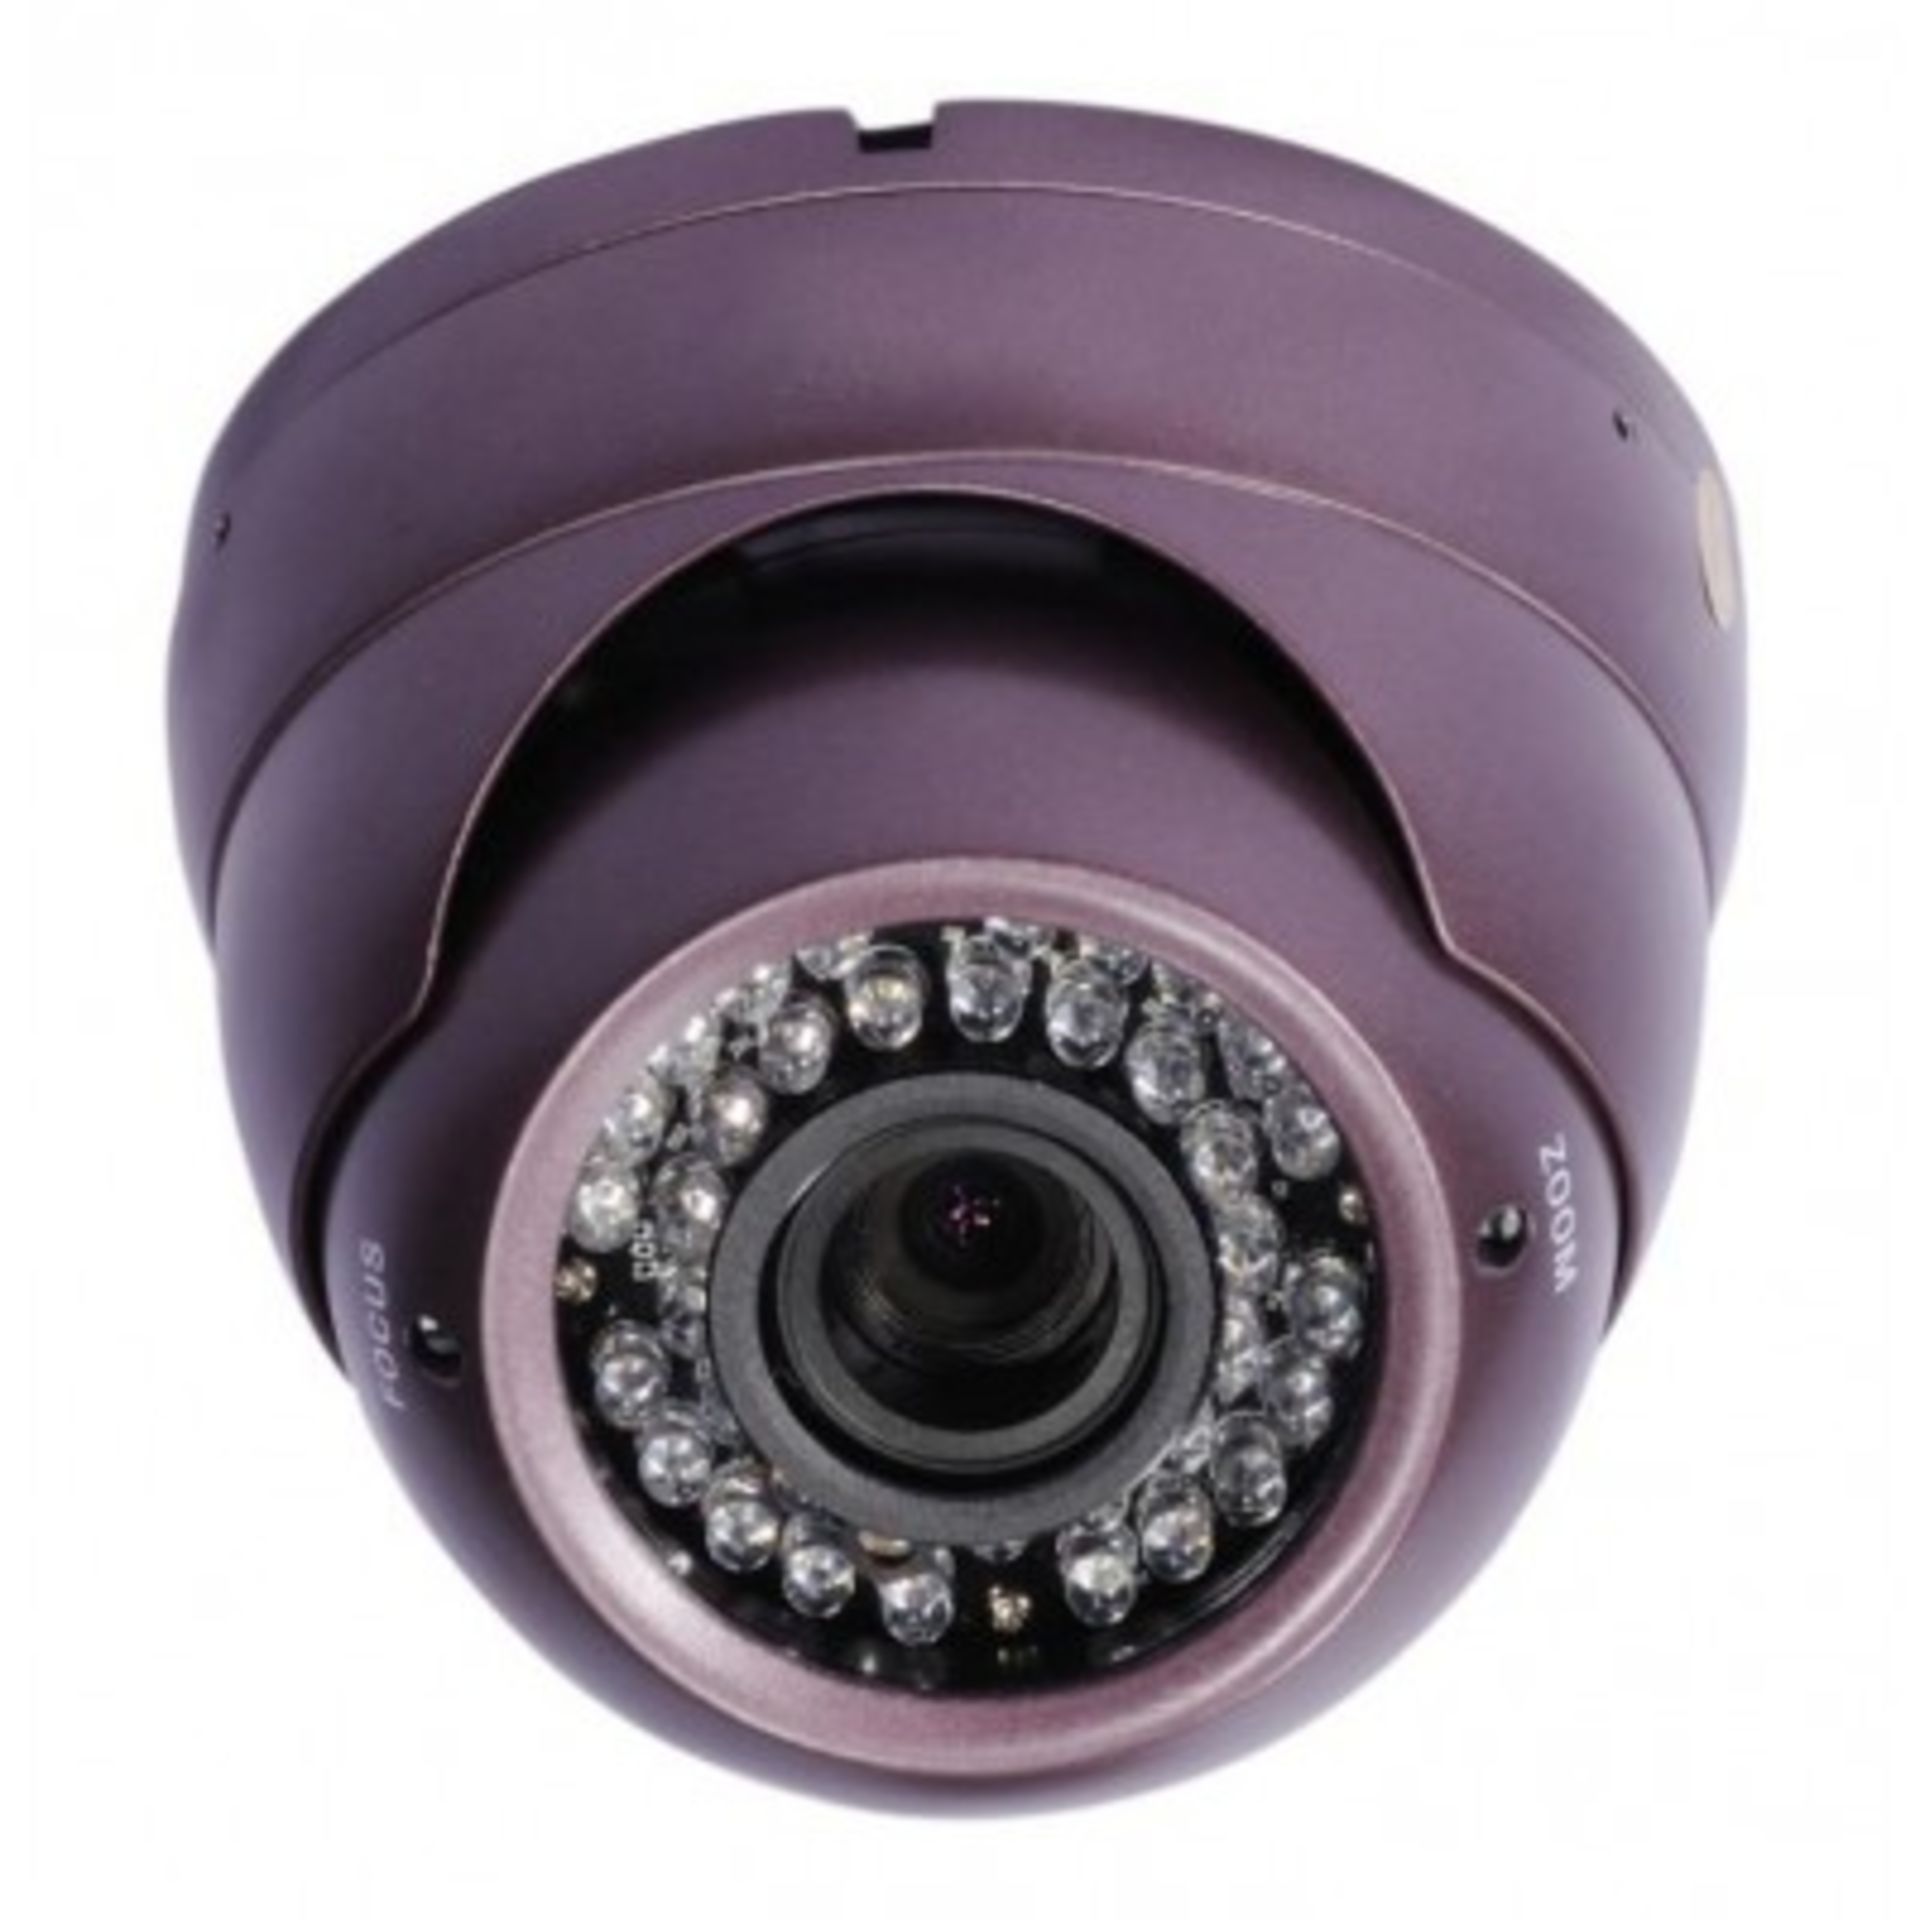 V *TRADE QTY* Brand New Avtech Dome Camera- 1/3" Sony Colour CCD 540TVL Vandal Proof LP66- purple